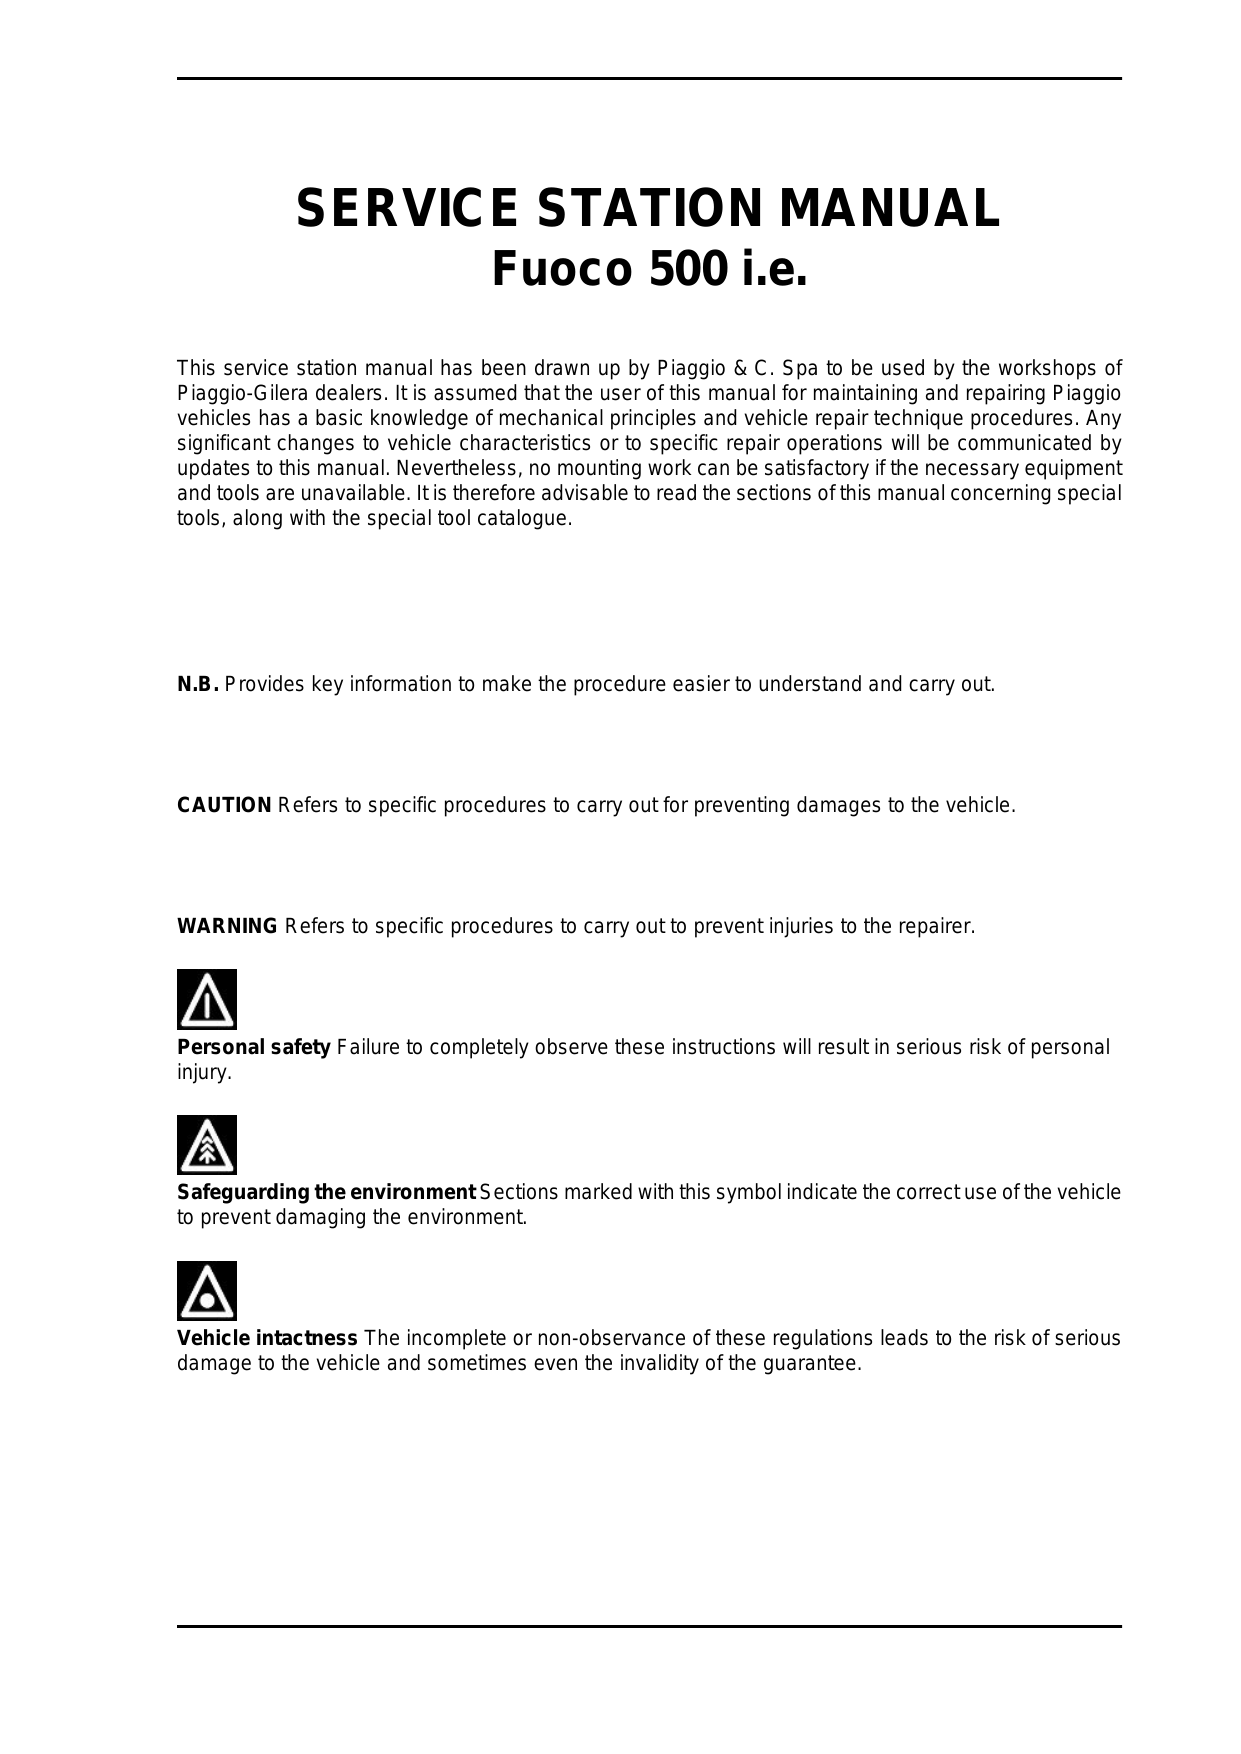 2007 Gilera Fuoco 500 i.e repair manual Preview image 3